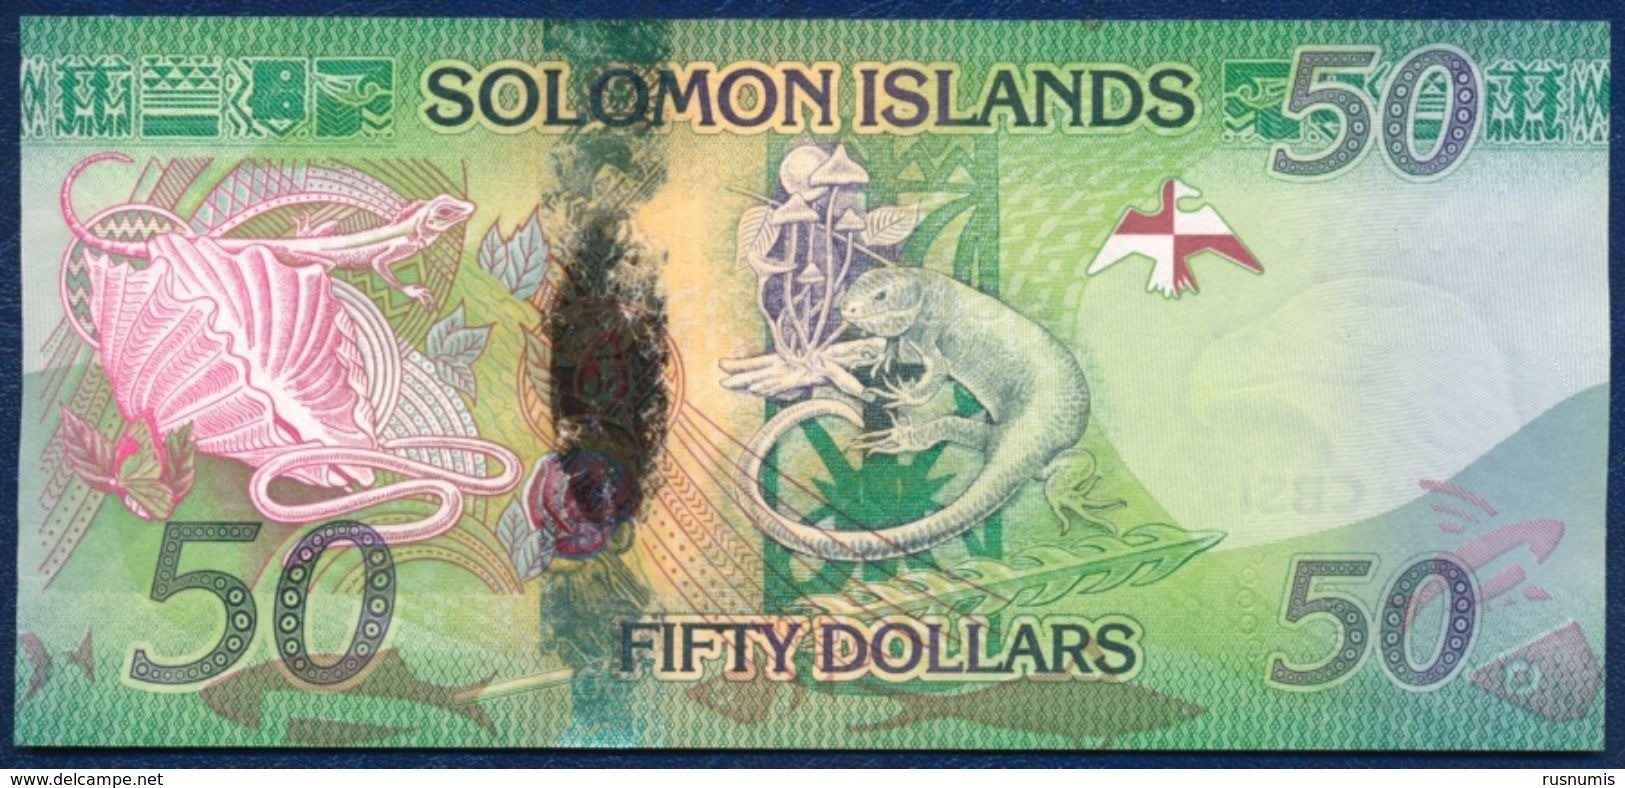 SOLOMON ISLANDS 50 DOLLARS P-35a LIZARD 2013 UNC - Isola Salomon